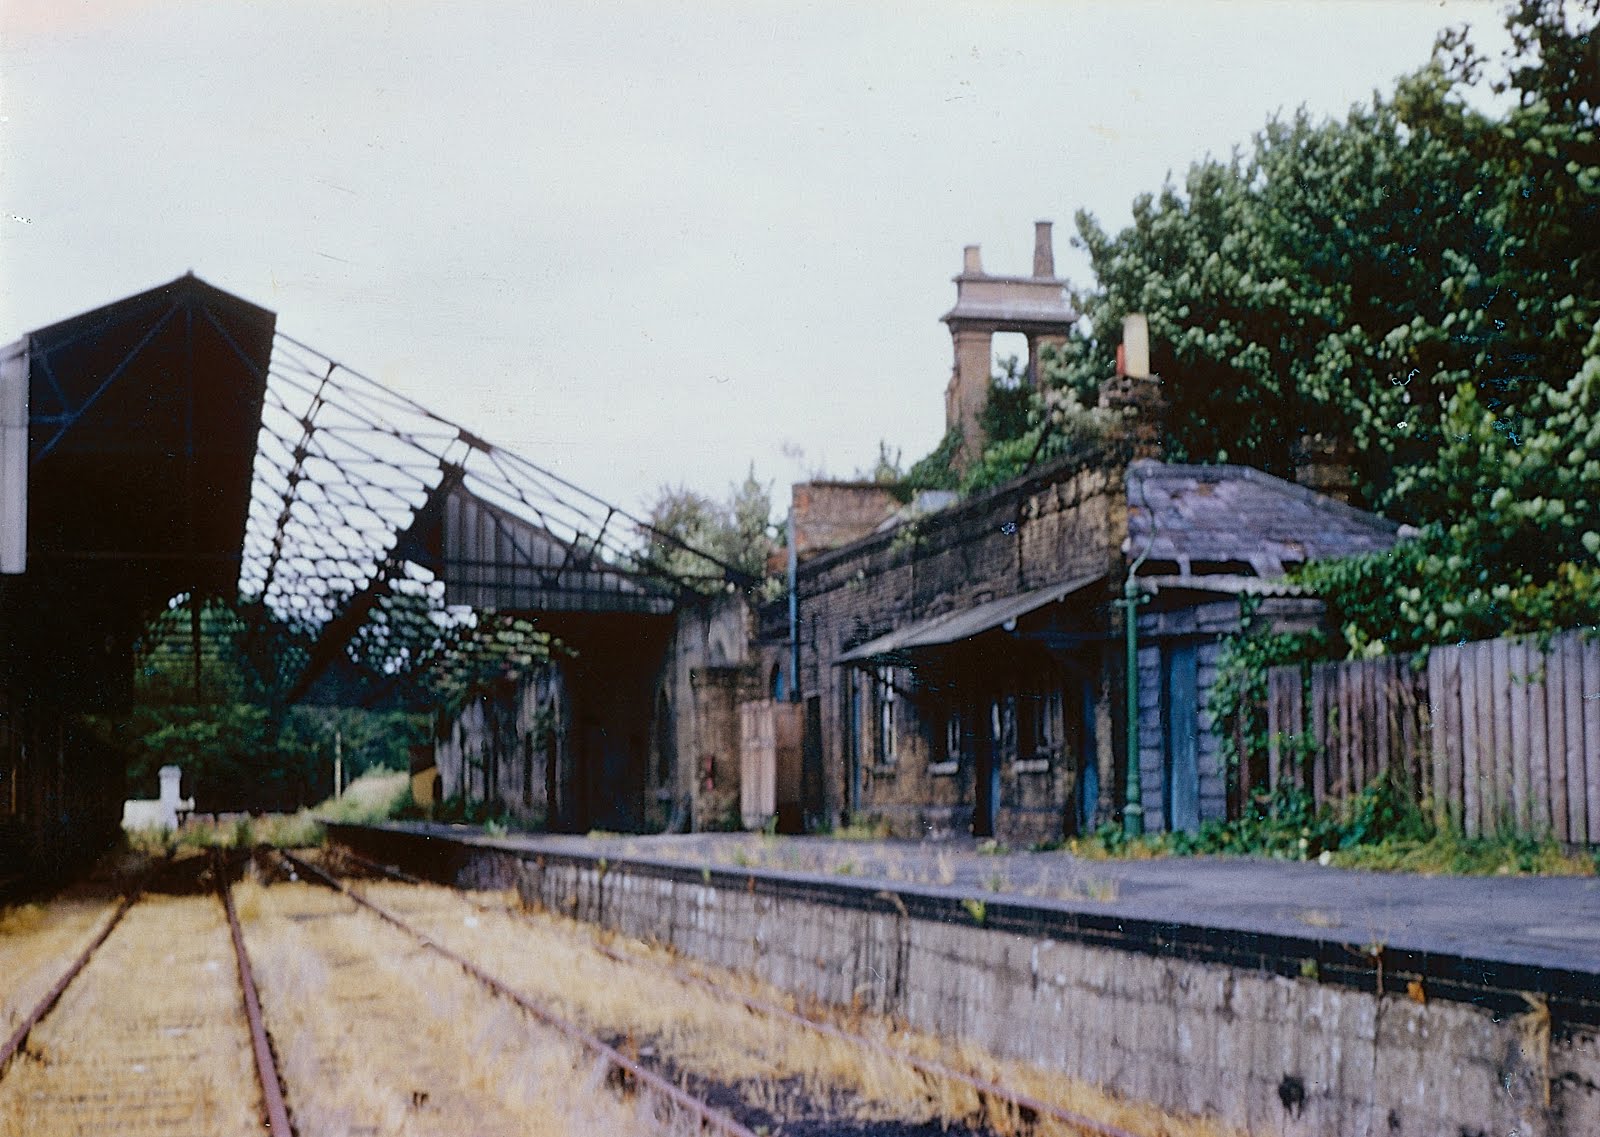 Station 1965